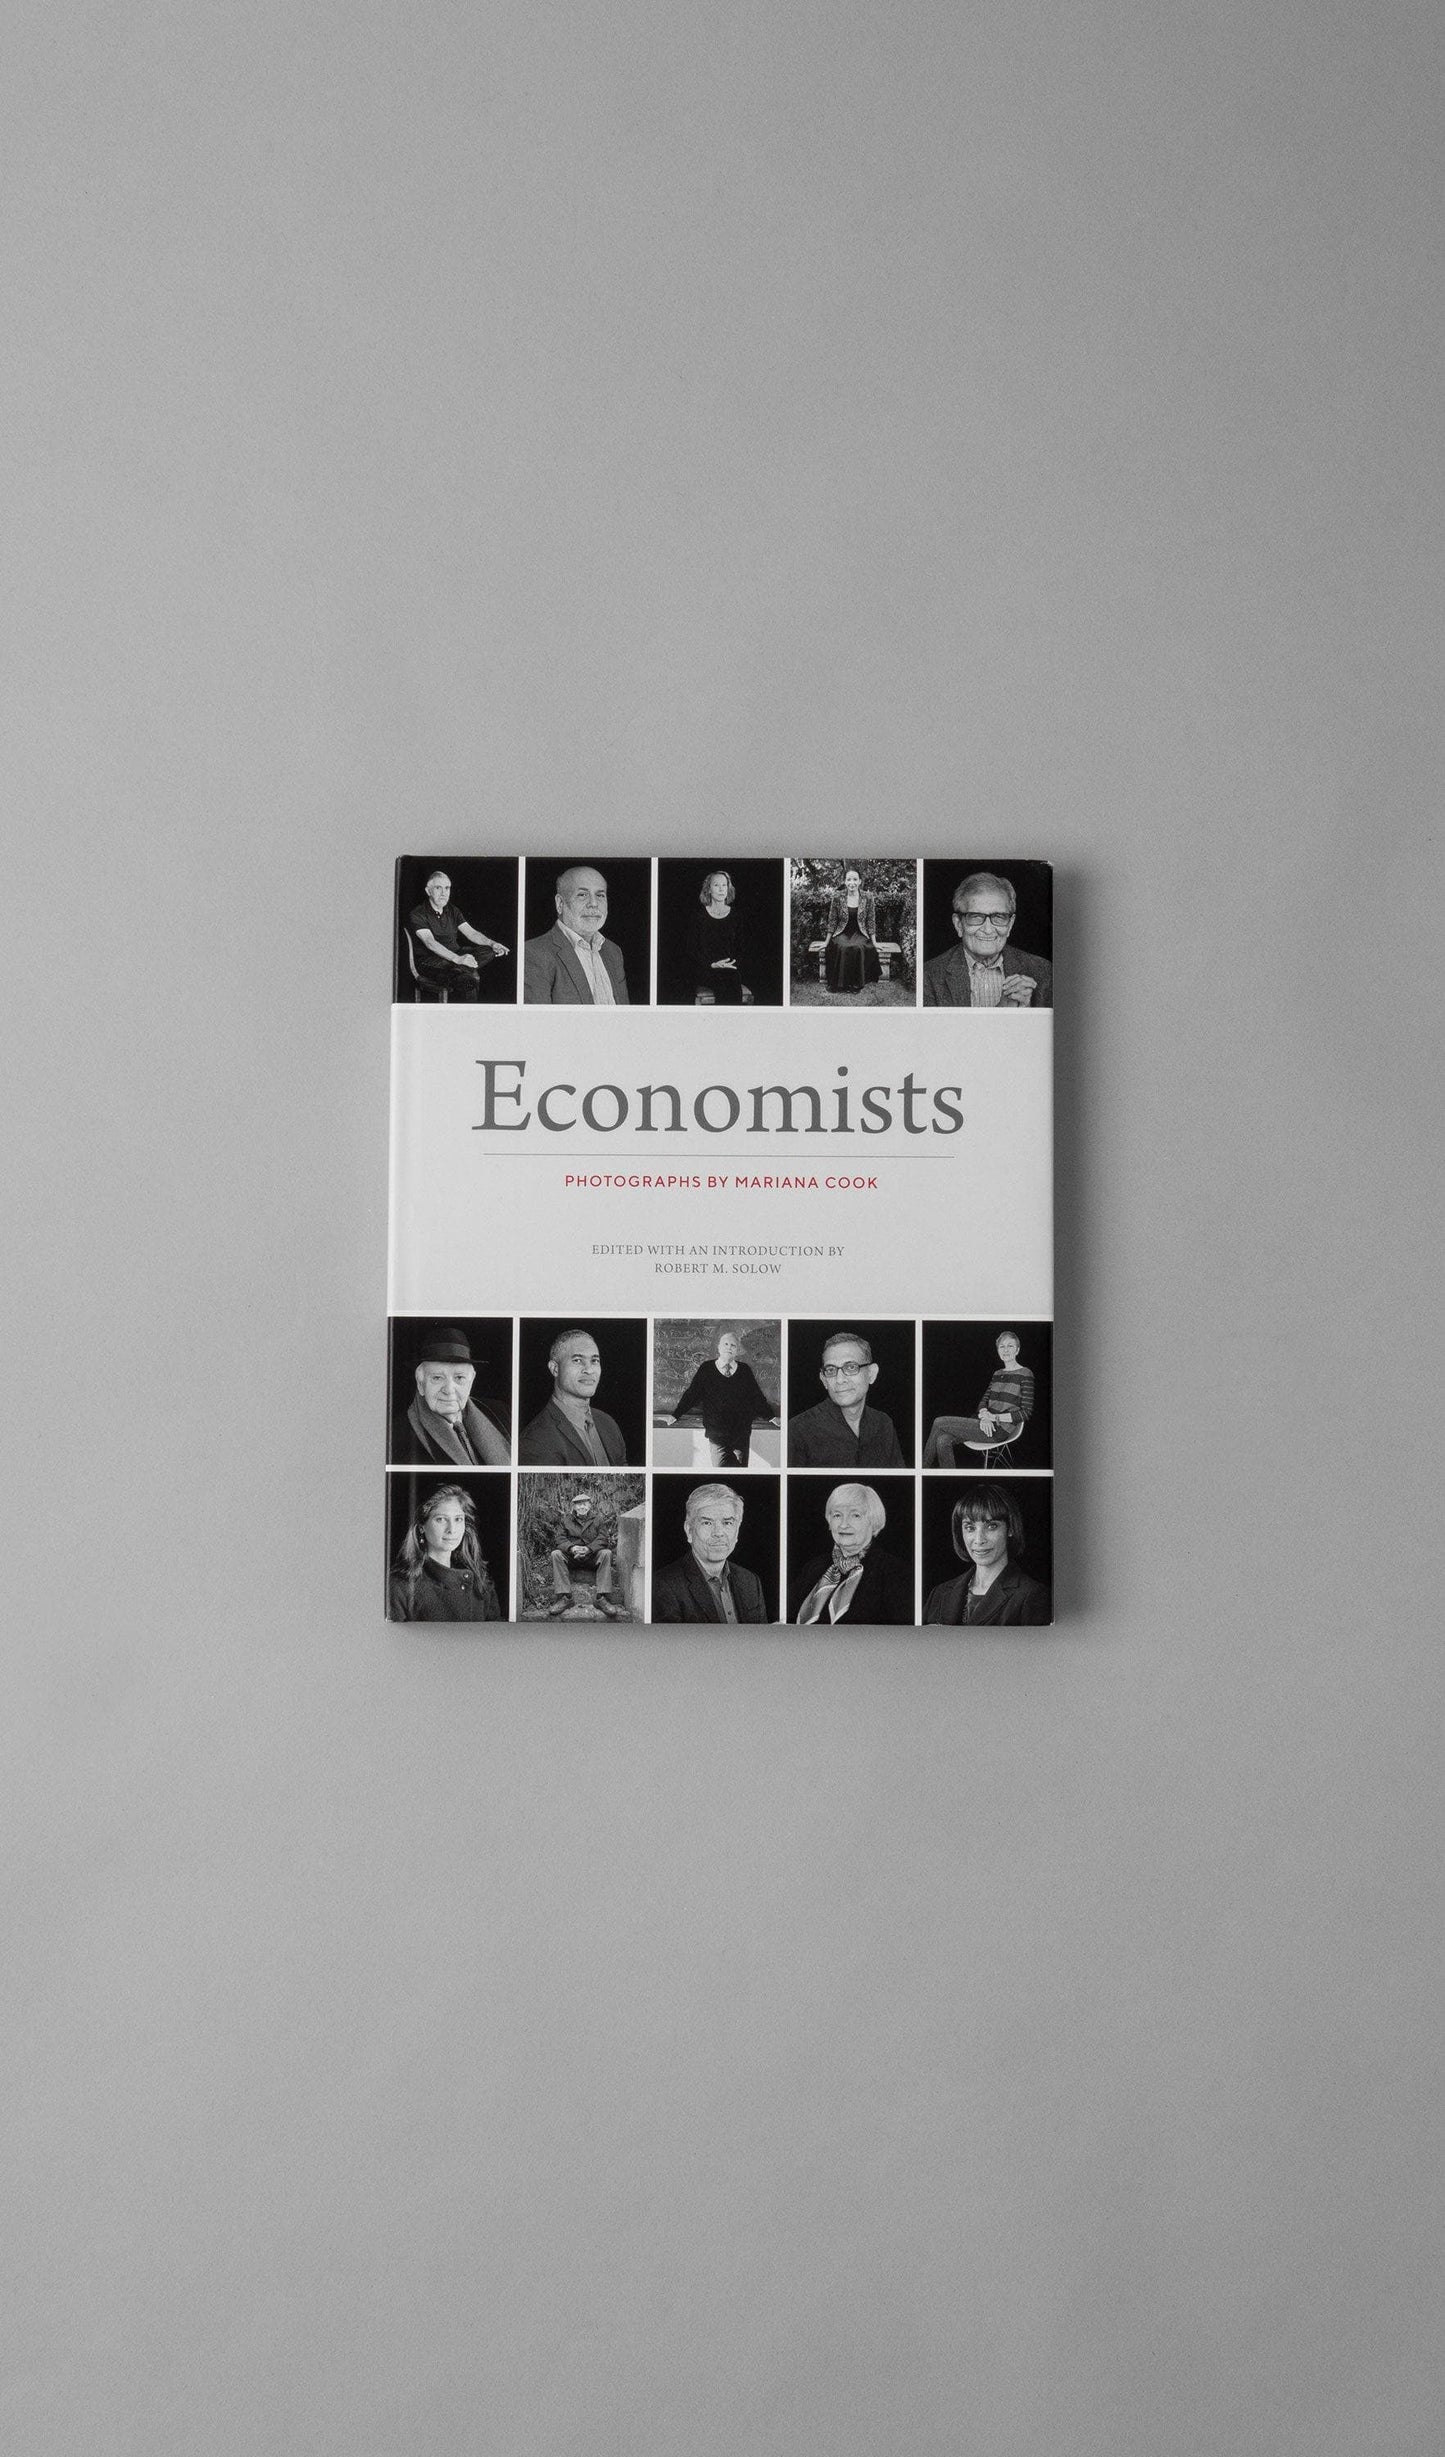 Acapella Ropa ACAPELLA MX Libro - Economists